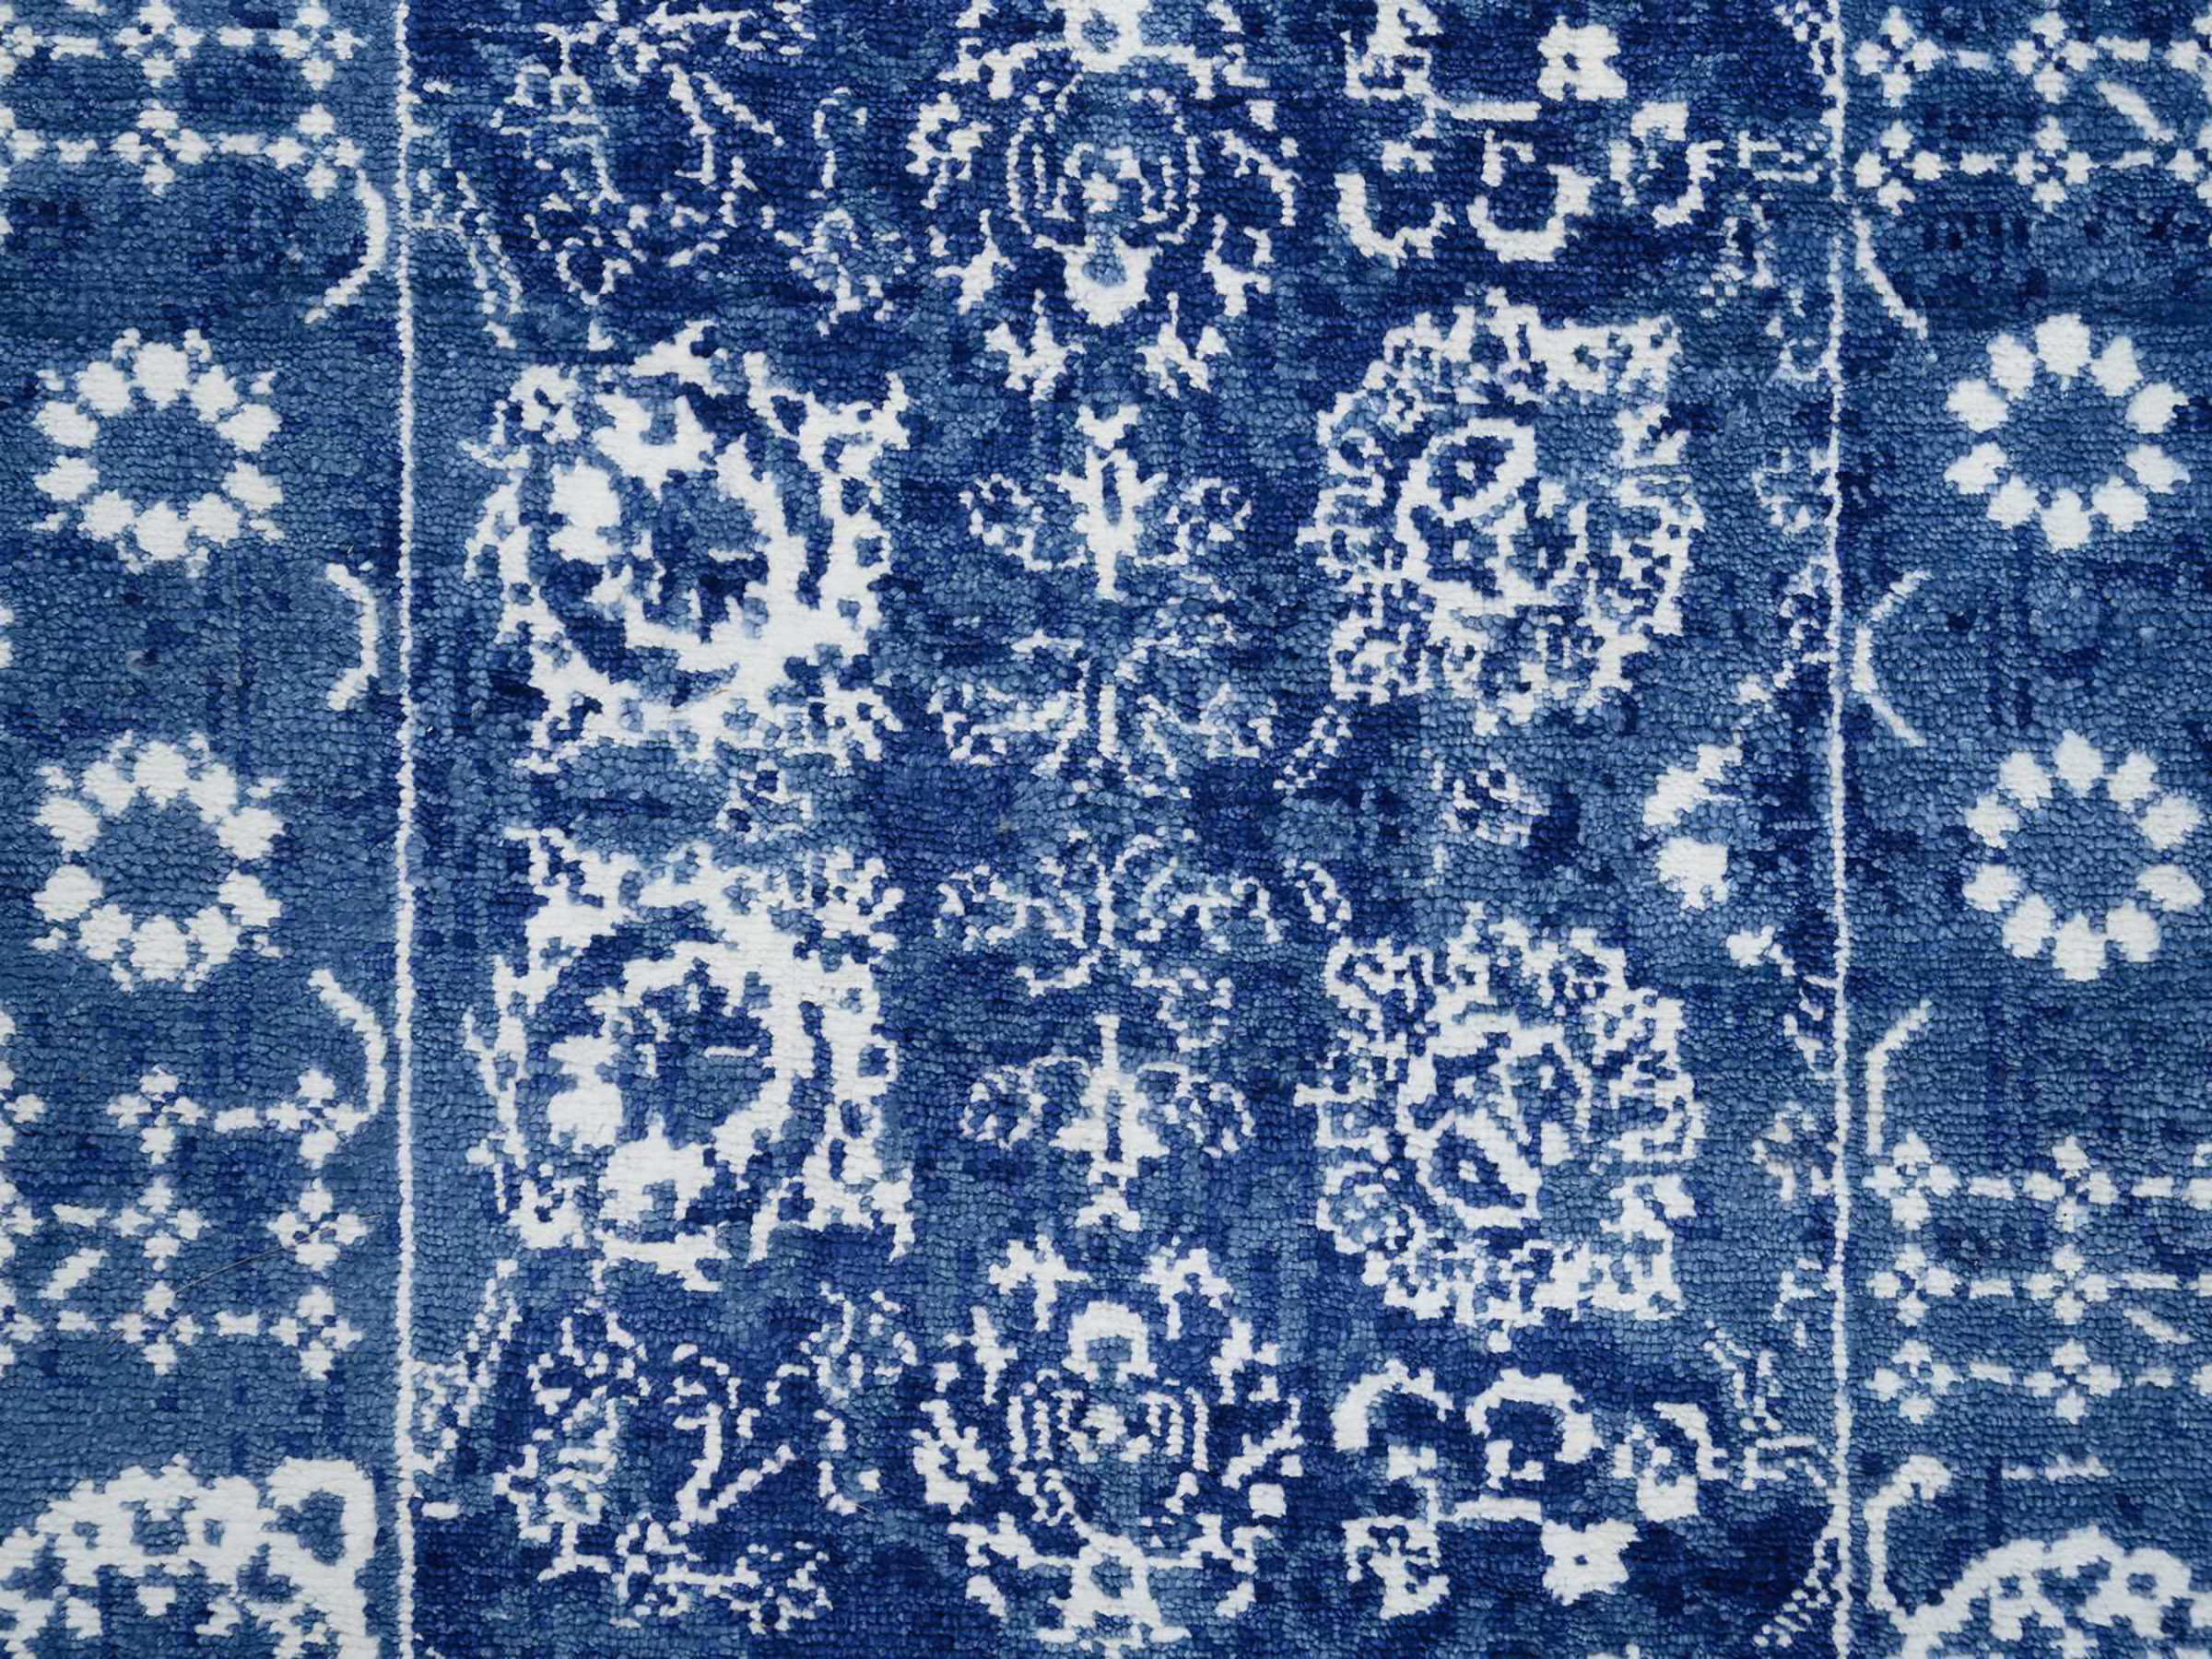 Denim Blue Hand Knotted Wool And Silk Tabriz Oriental Carpet Runner